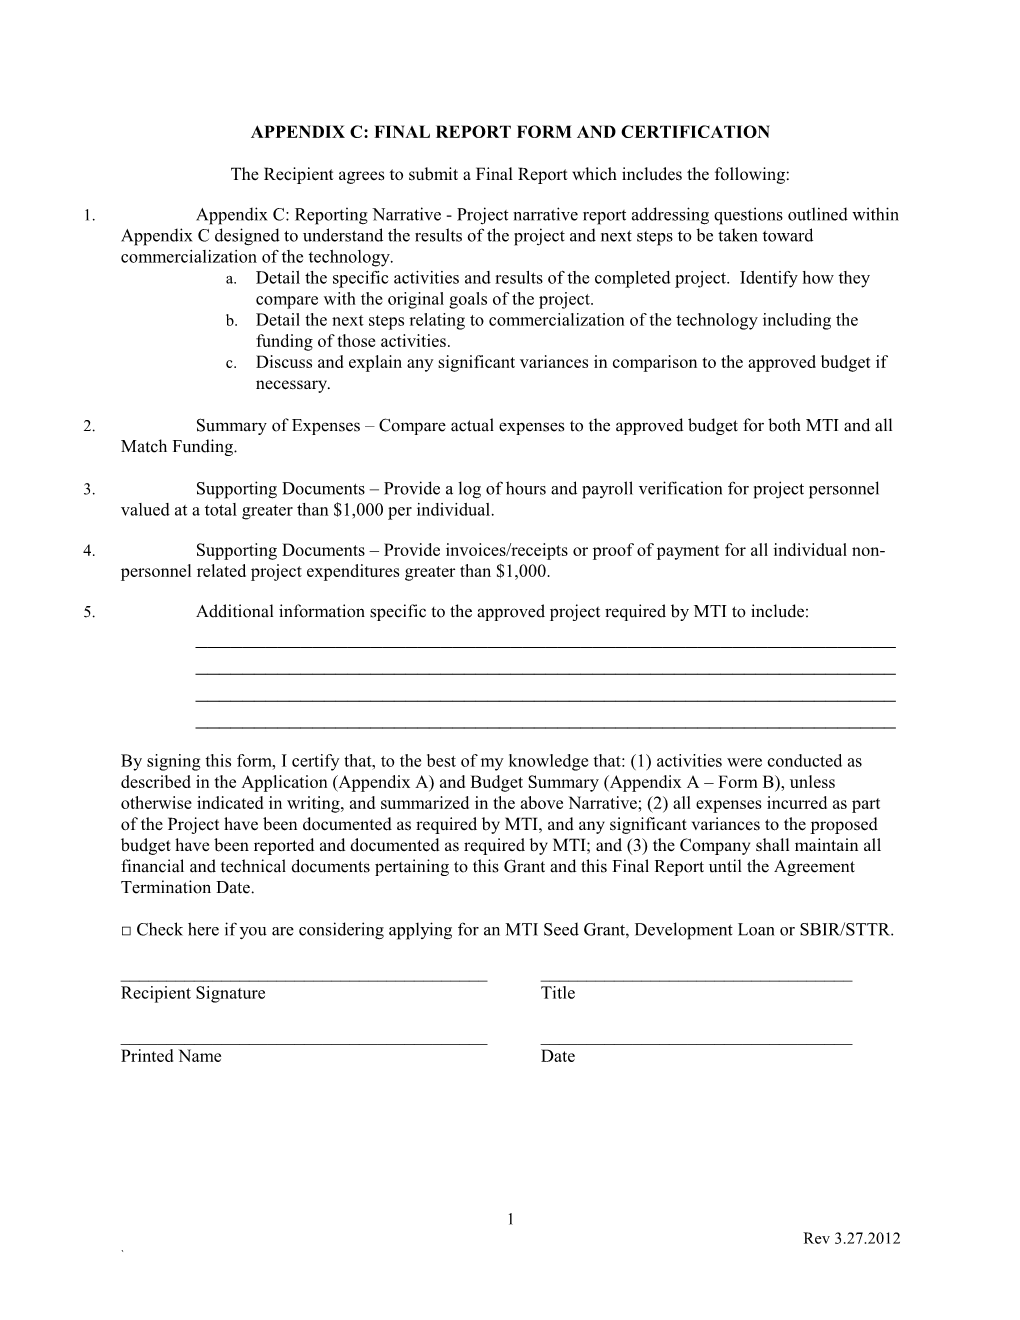 Appendix C: Final Report Form and Certification